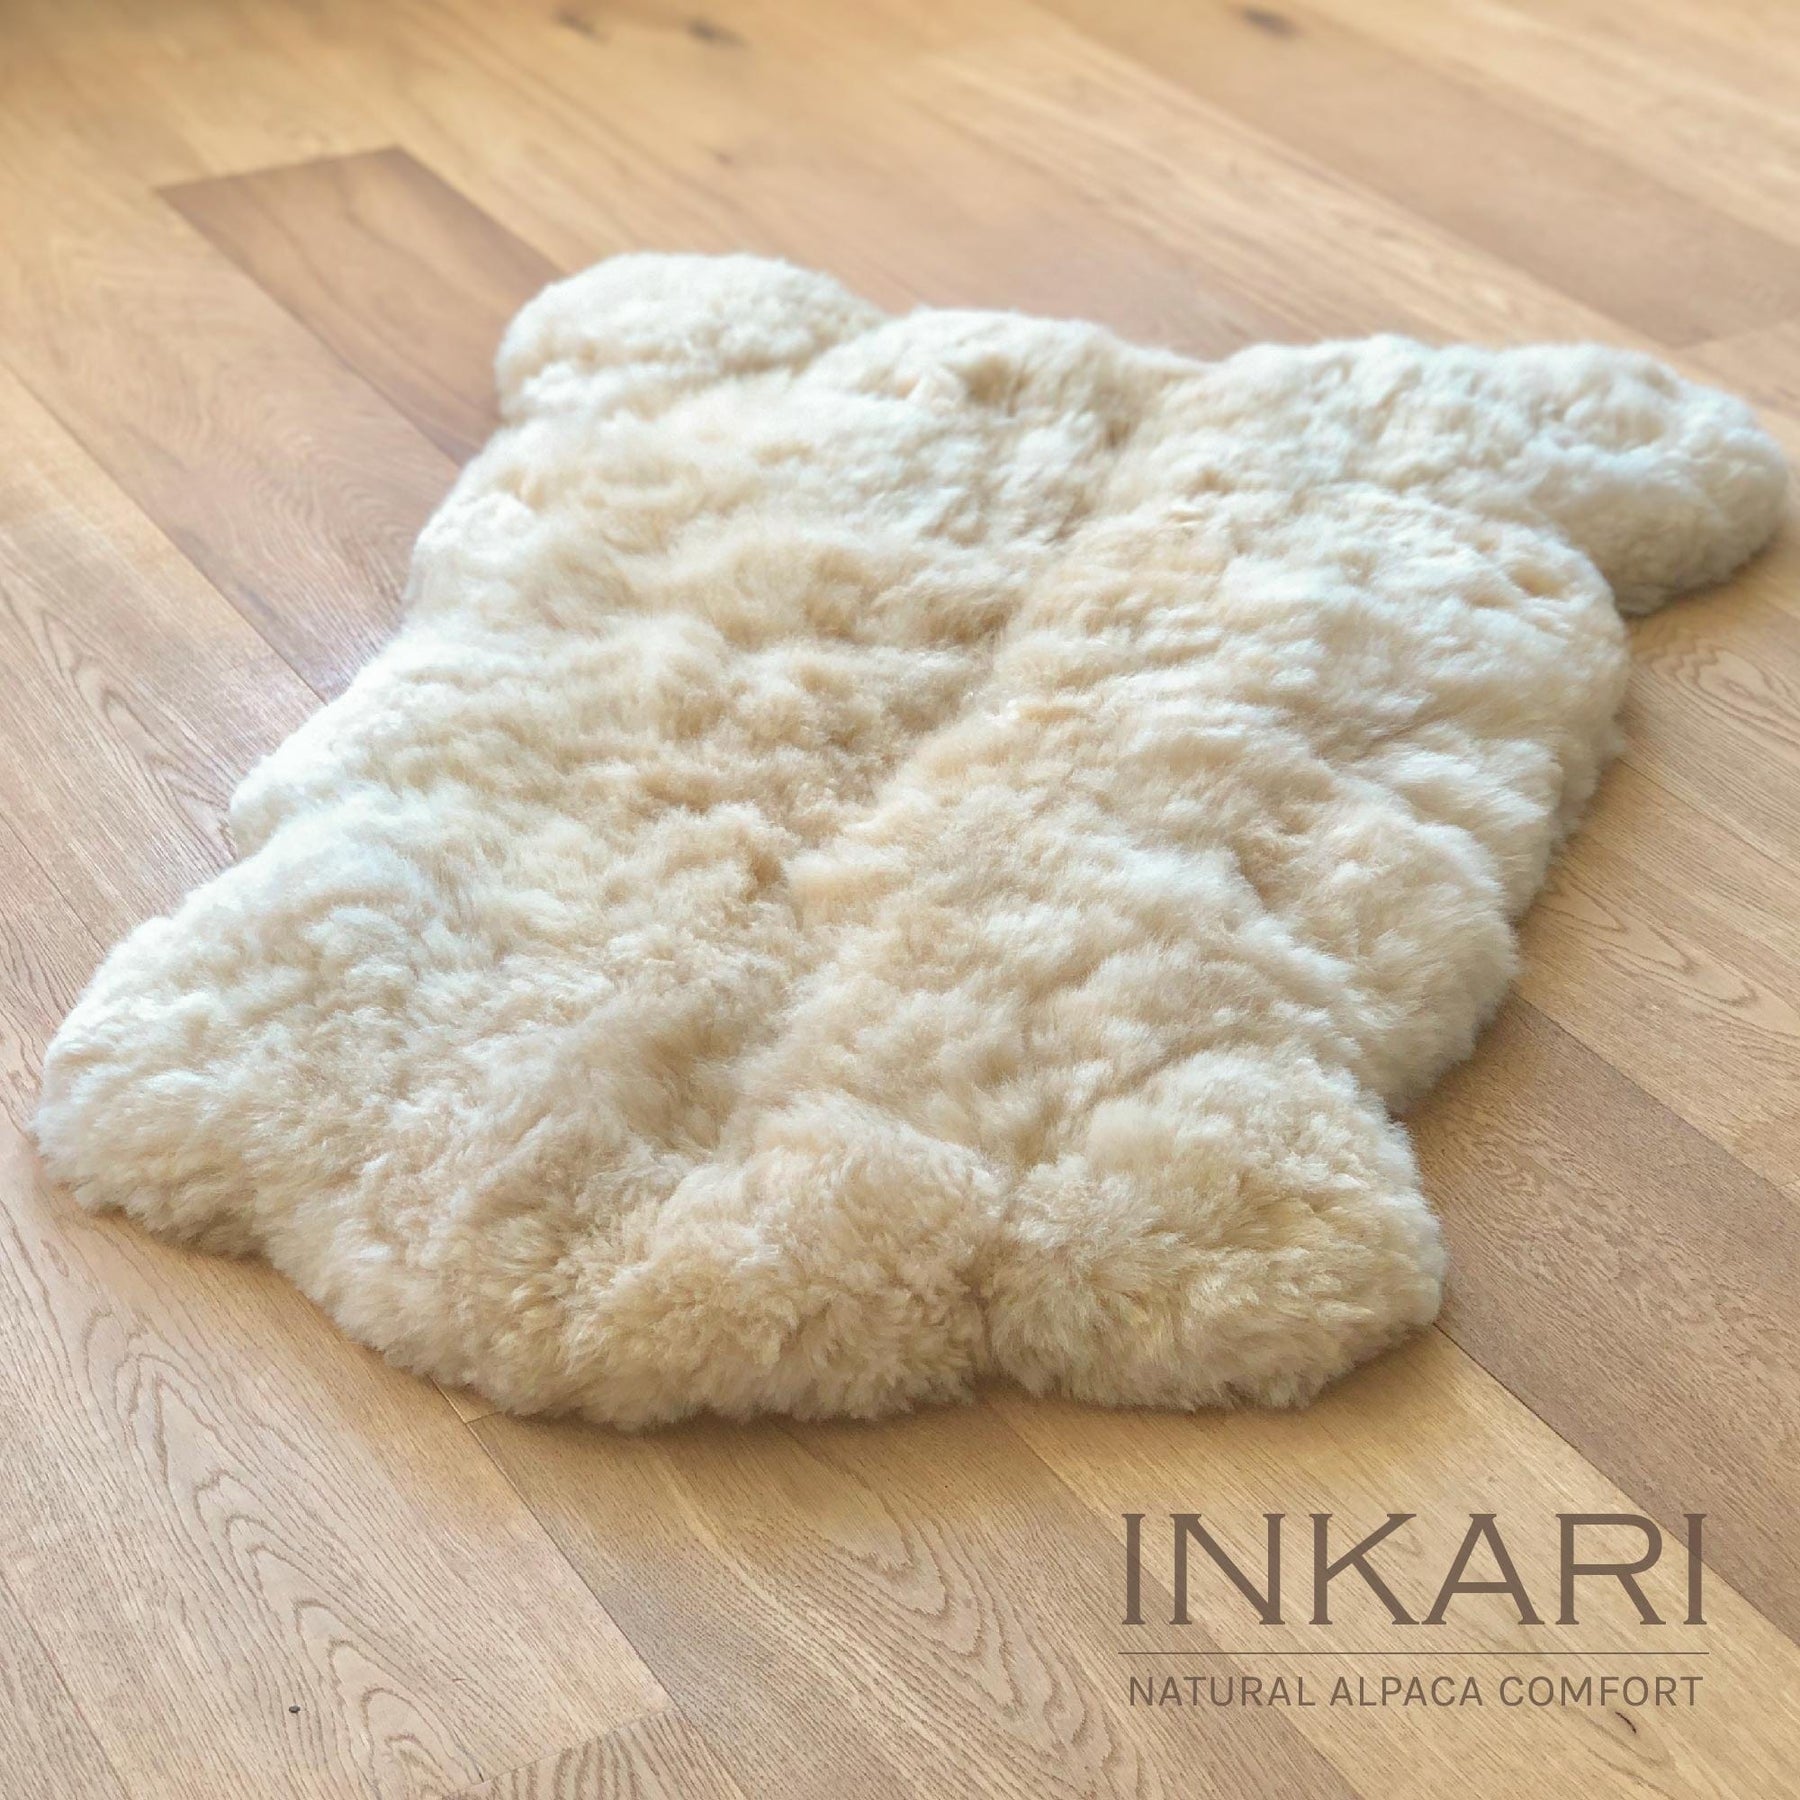 Reina - Handmade Alpaca Rug - Blond - alpaca wool - alpaca products & gifts - handmade - fairtrade gifts - by Inkari